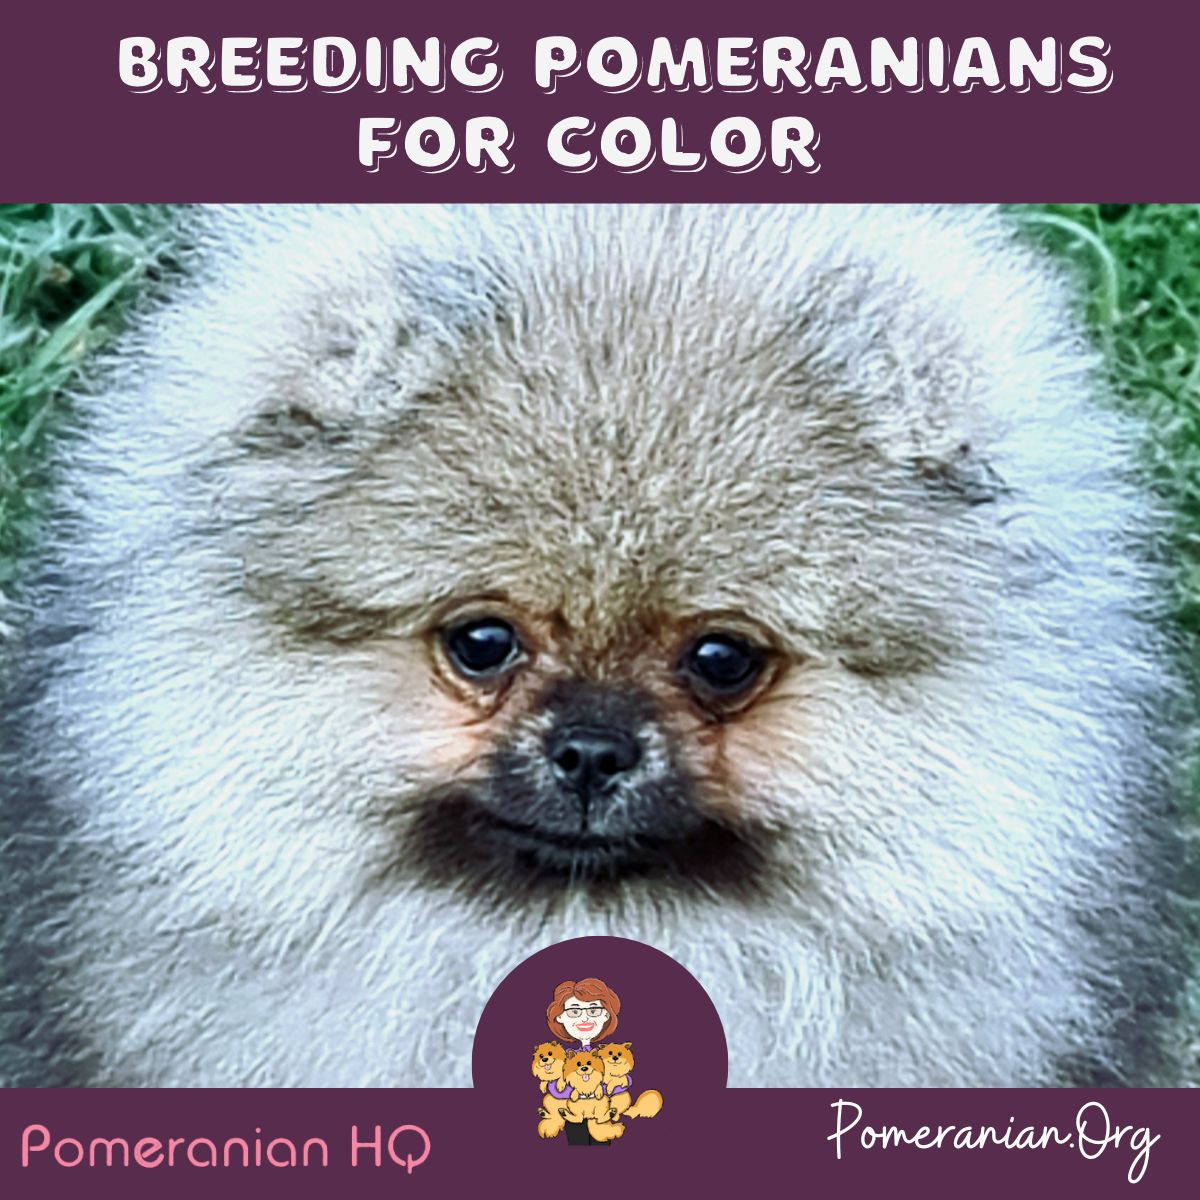 Breeding Pomeranians for Color